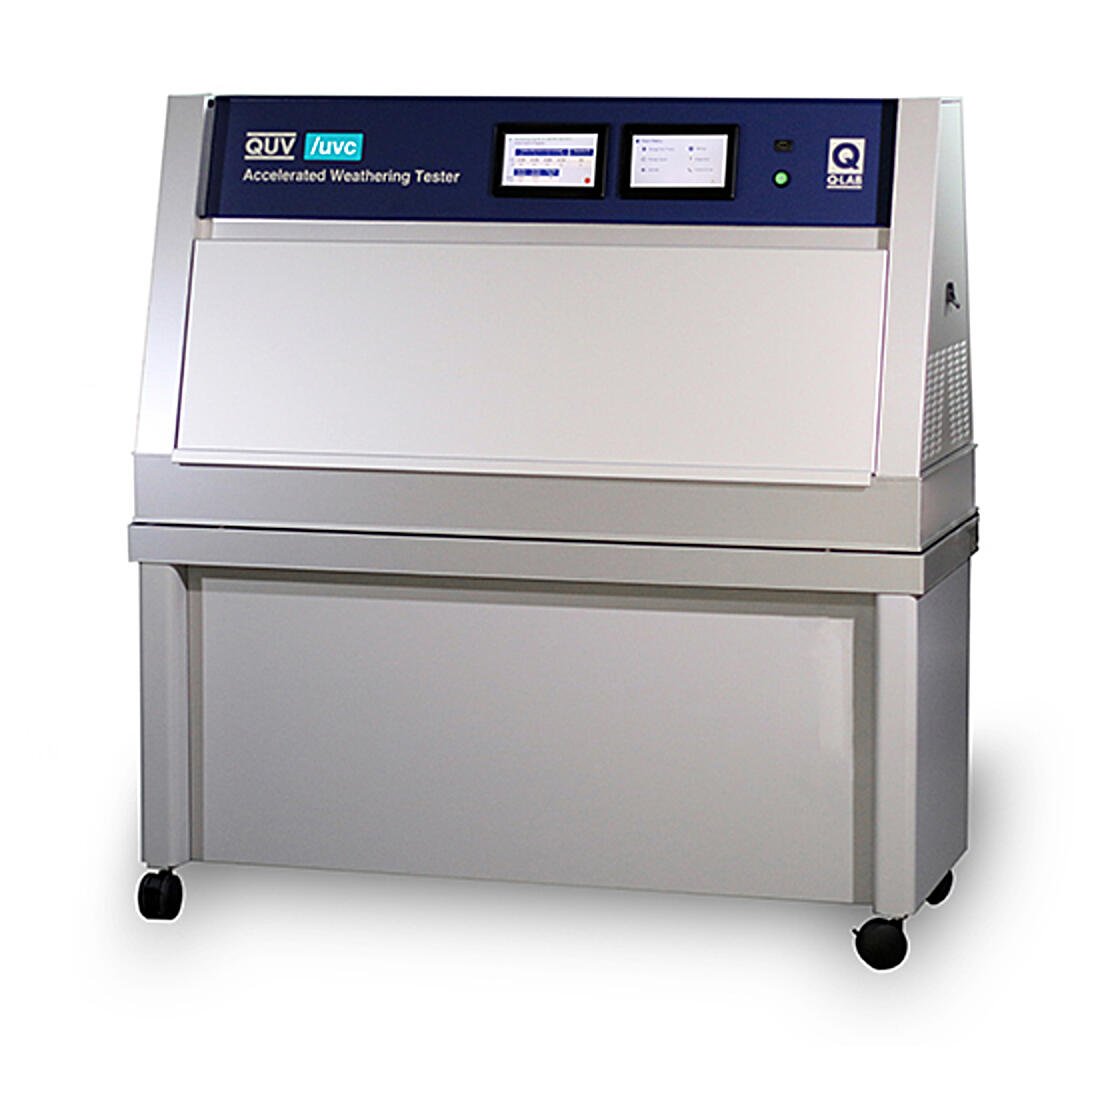 Q-Lab QUV/se 紫外老化耐候试验箱 紫外光加速老化耐气候